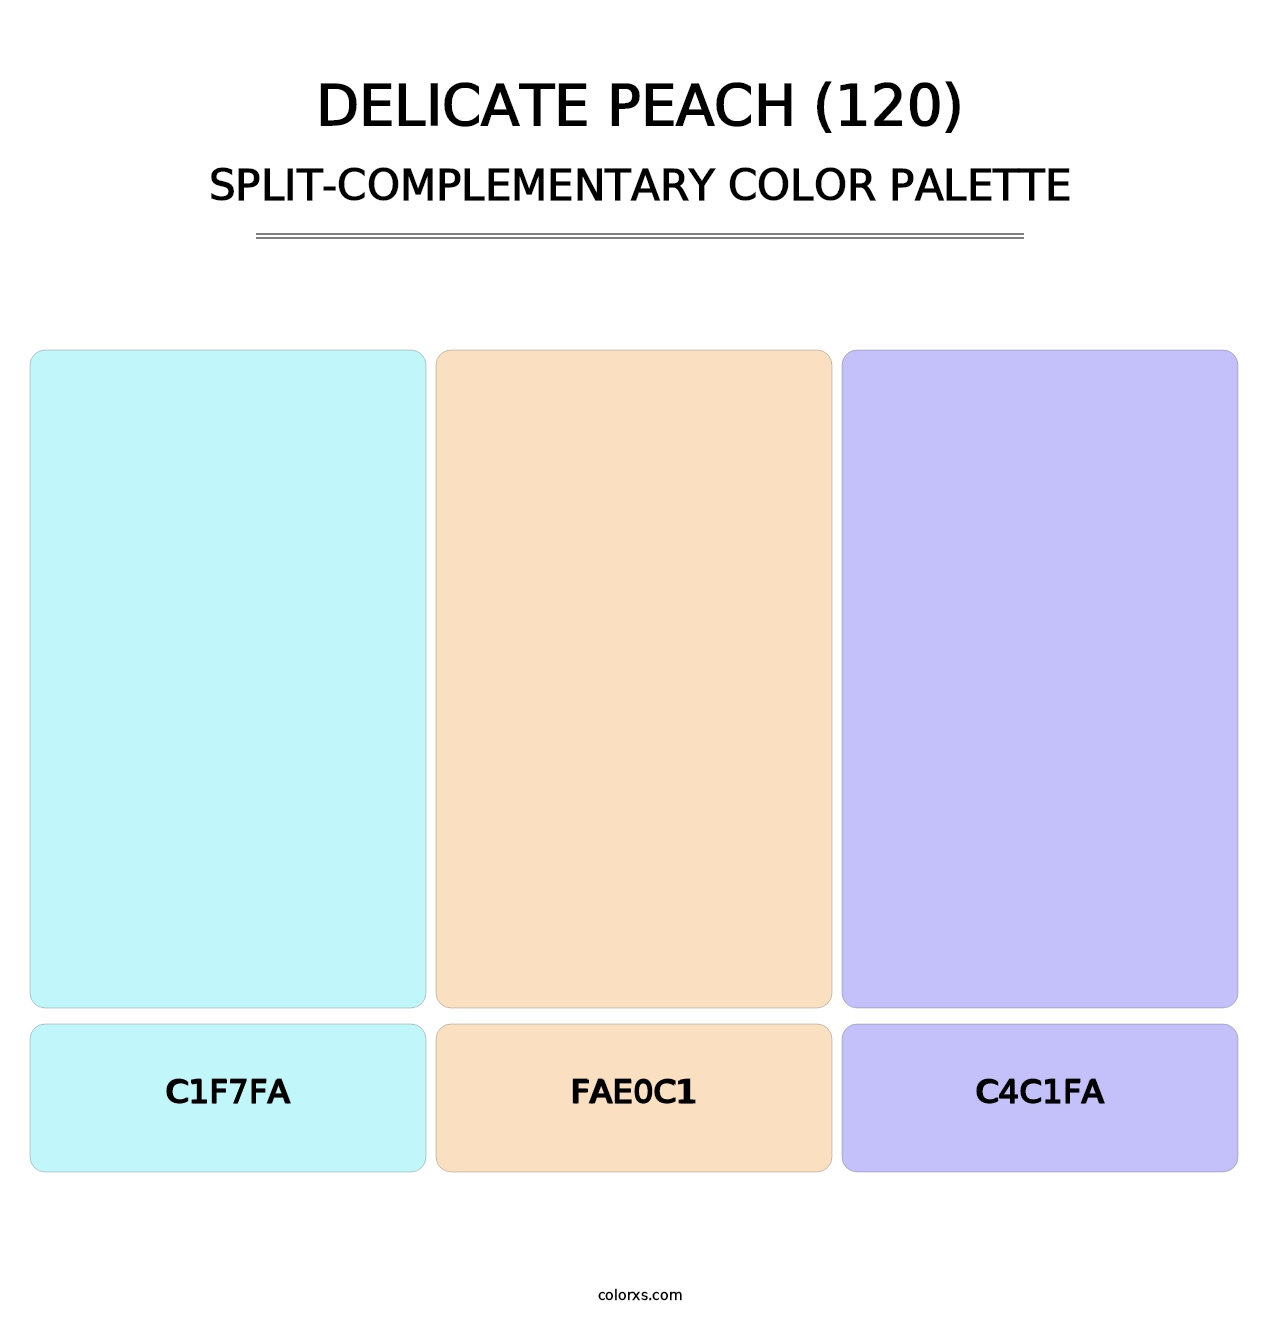 Delicate Peach (120) - Split-Complementary Color Palette